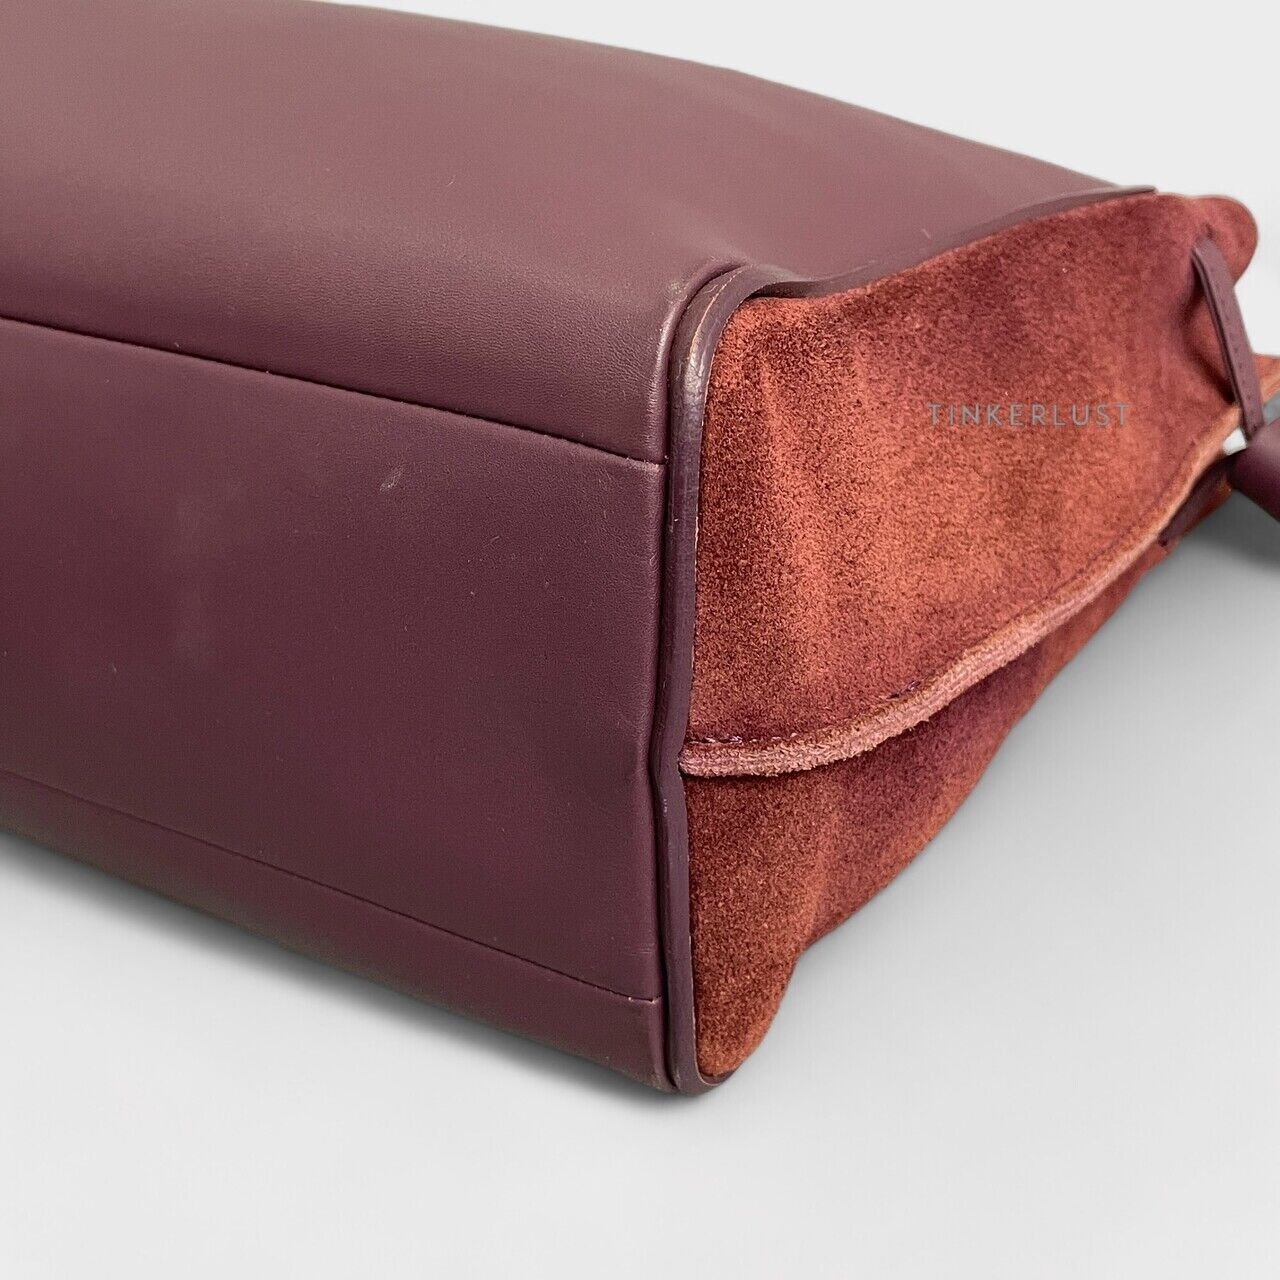 Longchamp Penelope Purple Leather GHW Tote Bag